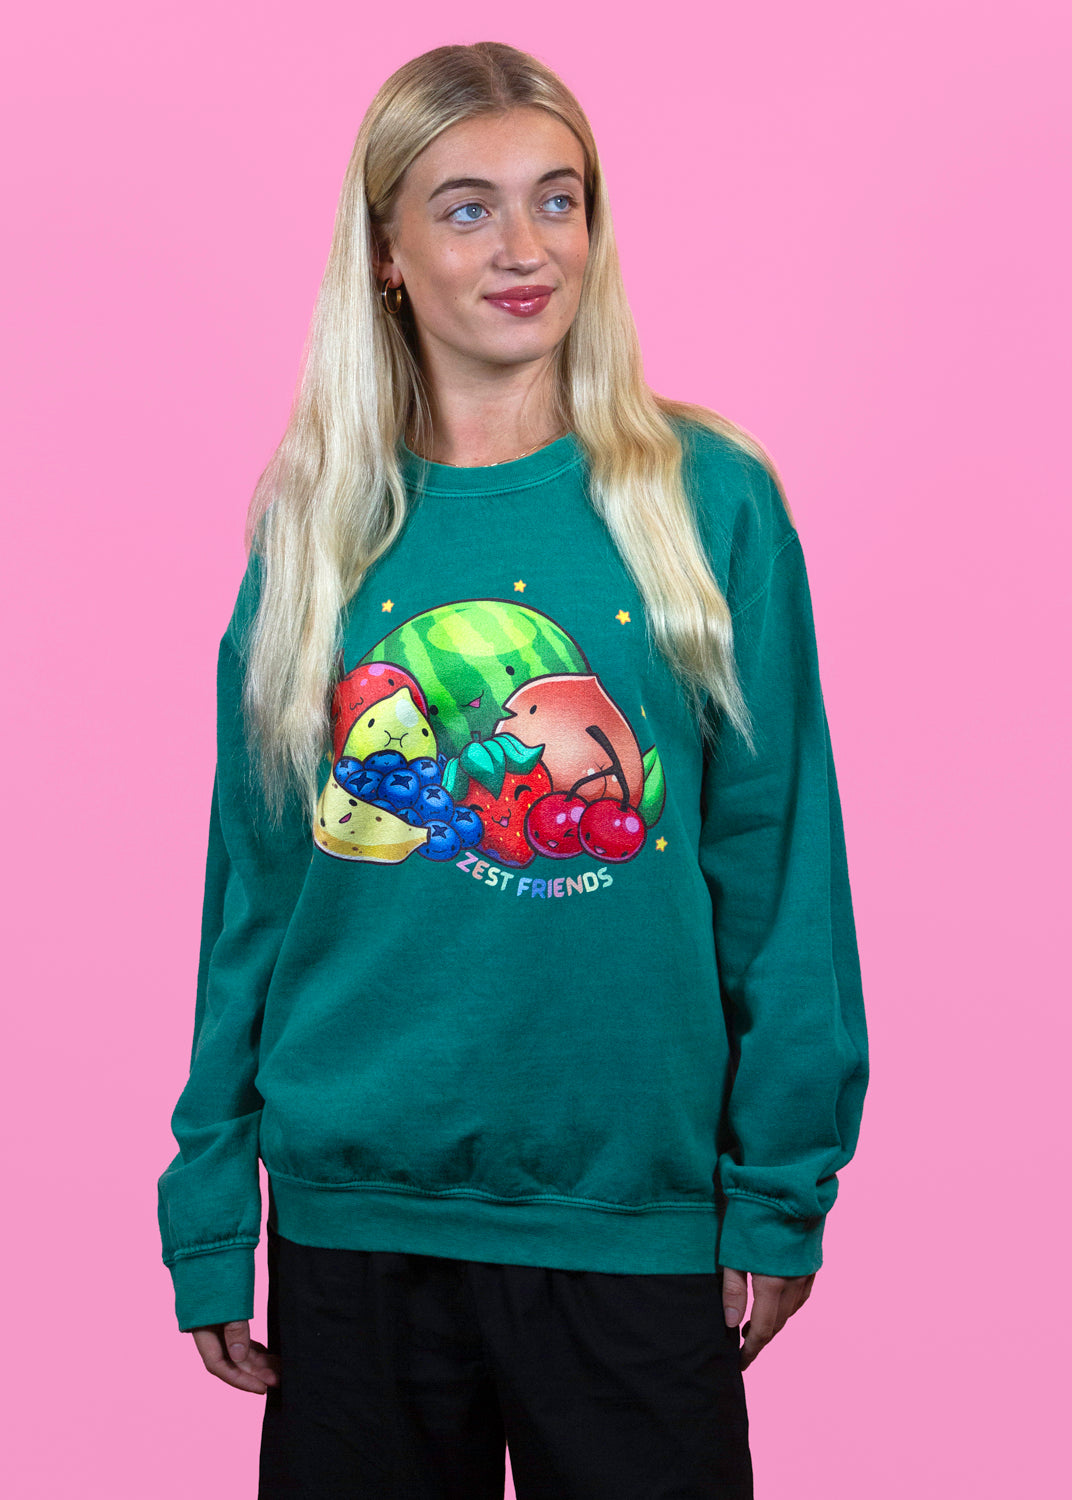 Home of Rainbows - Zest Friends Sweater